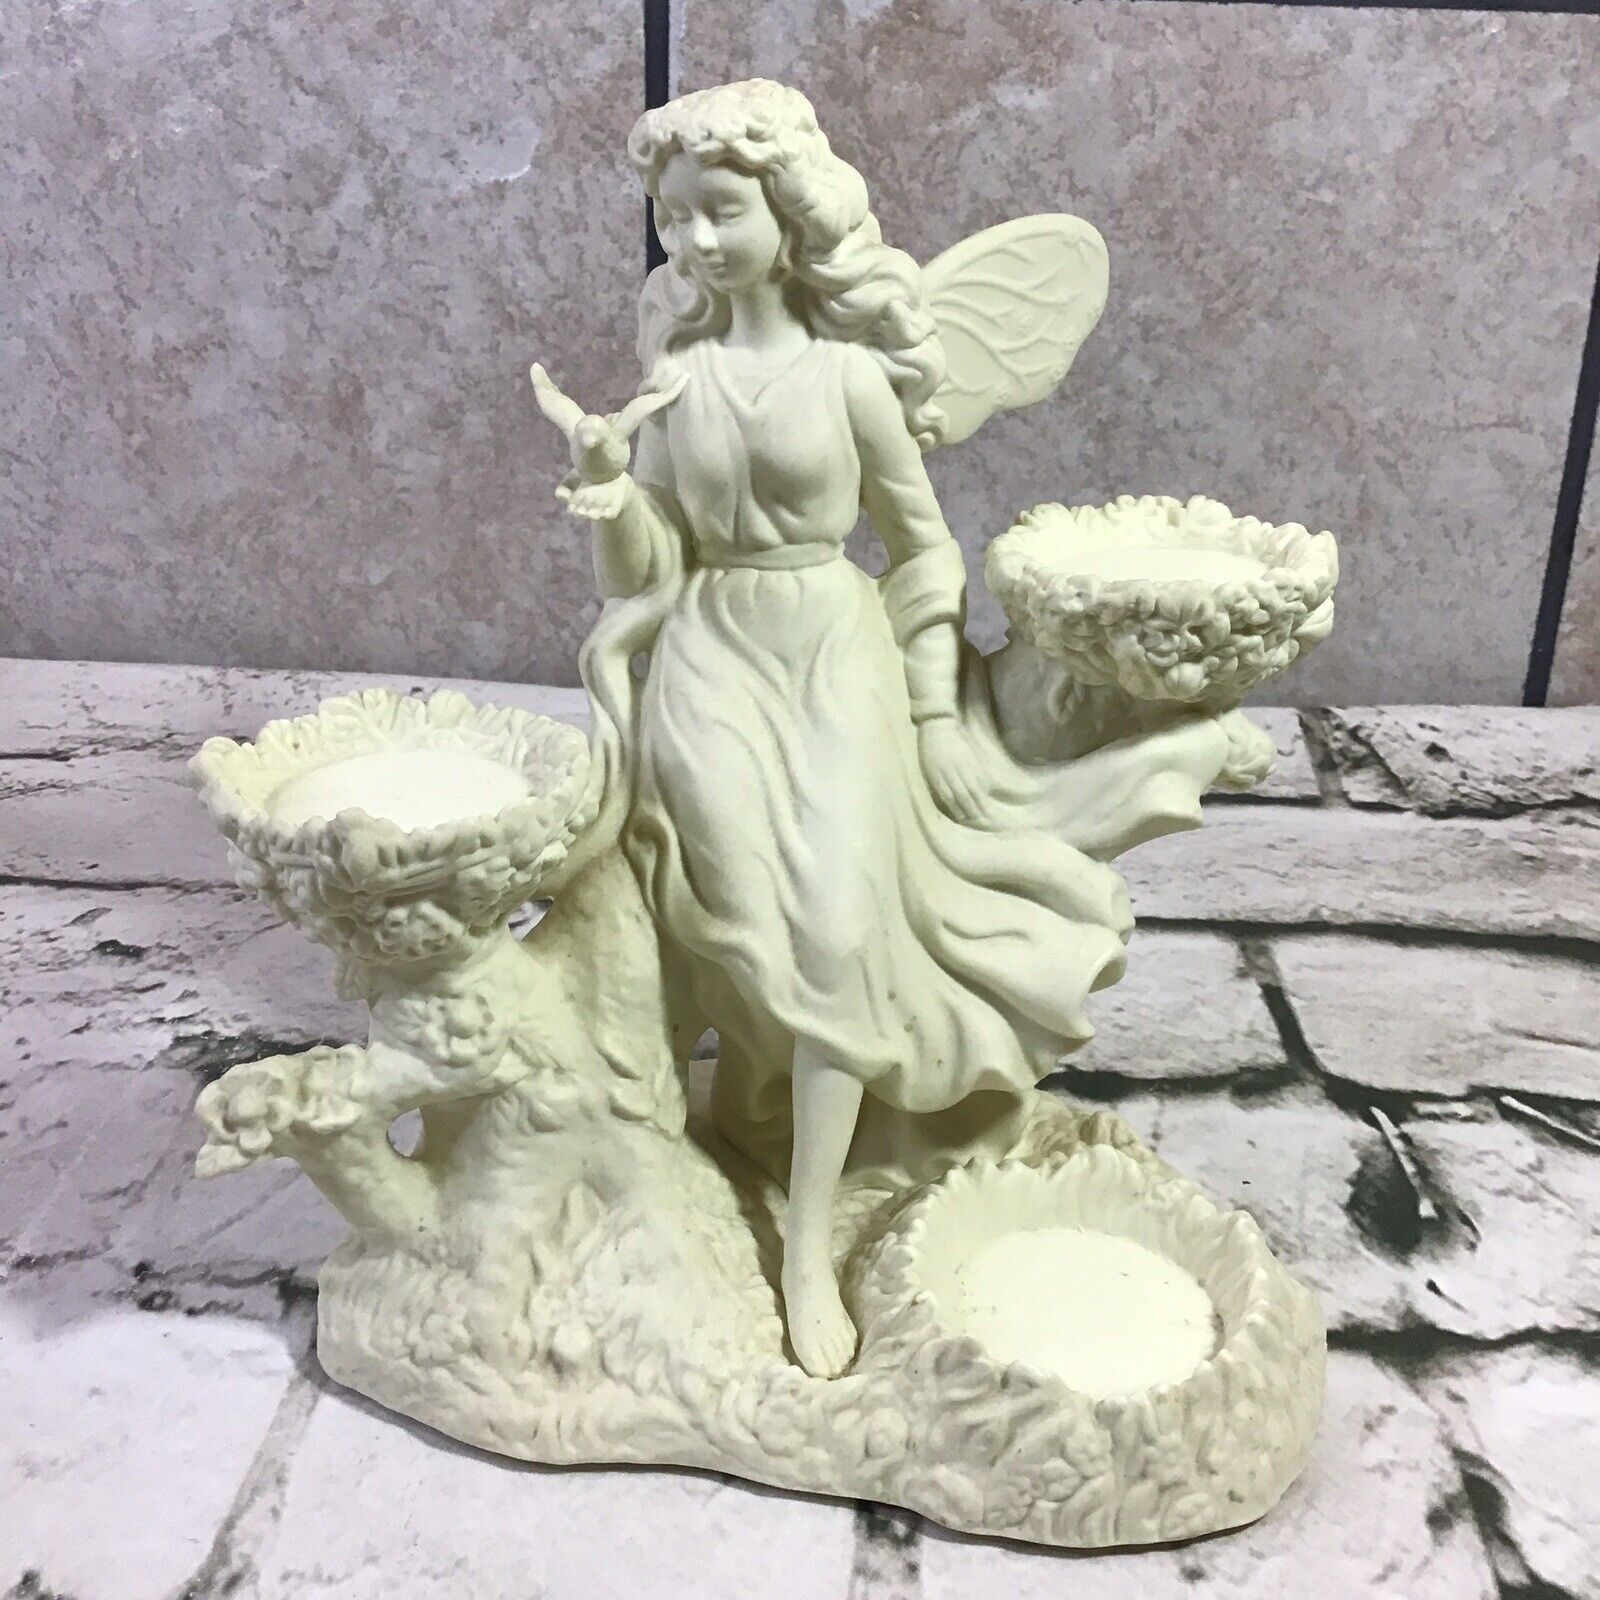 PartyLite Ariana's Garden Fairy Statue 3 Tea Light Candle Holder #P7298